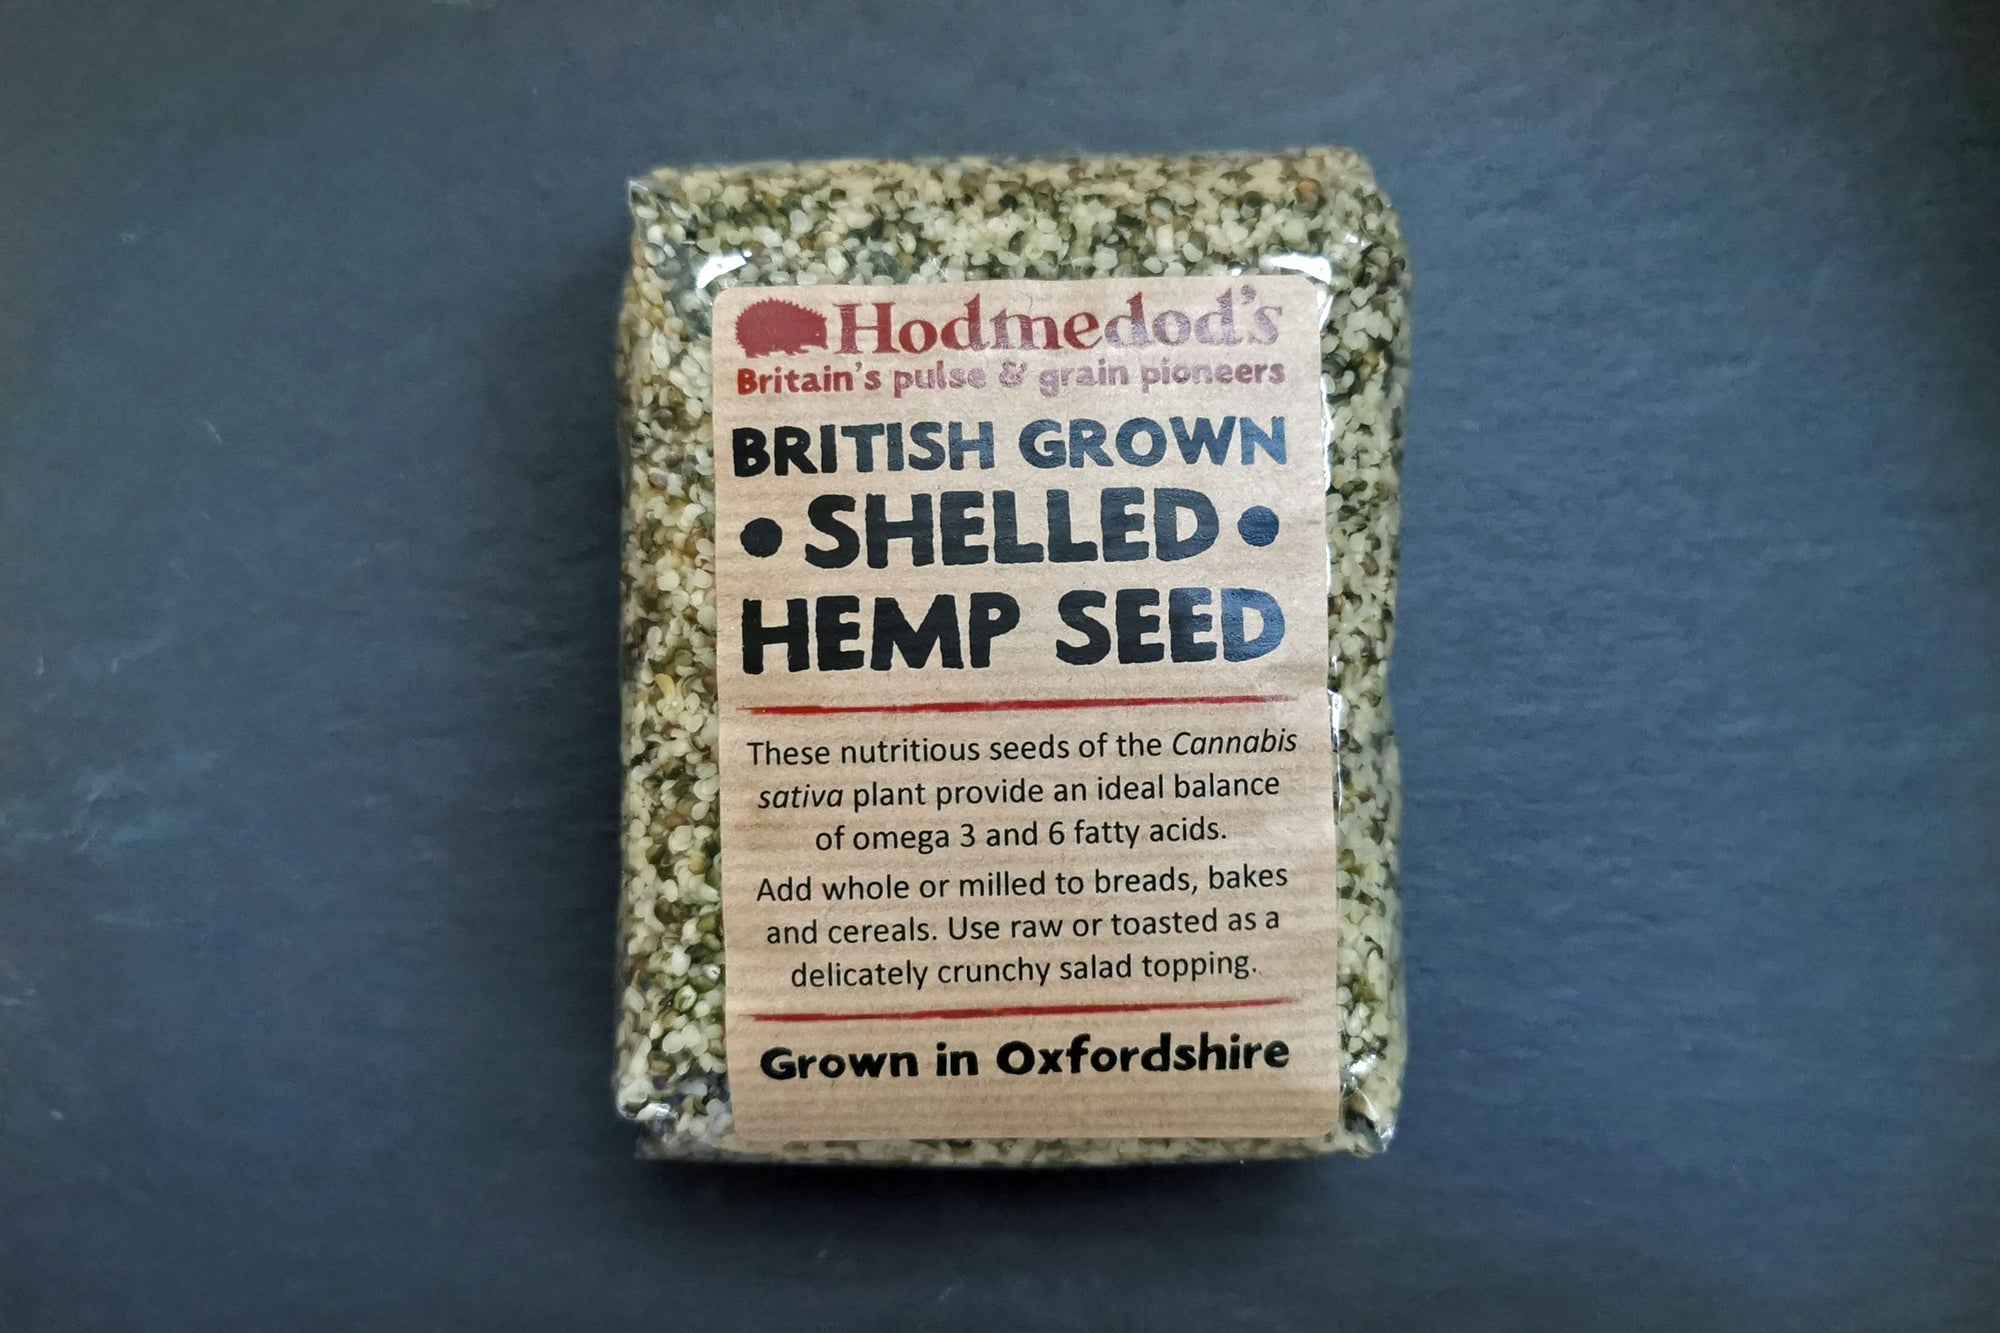 Hemp Seed, Shelled - Hodmedod's British Pulses & Grains